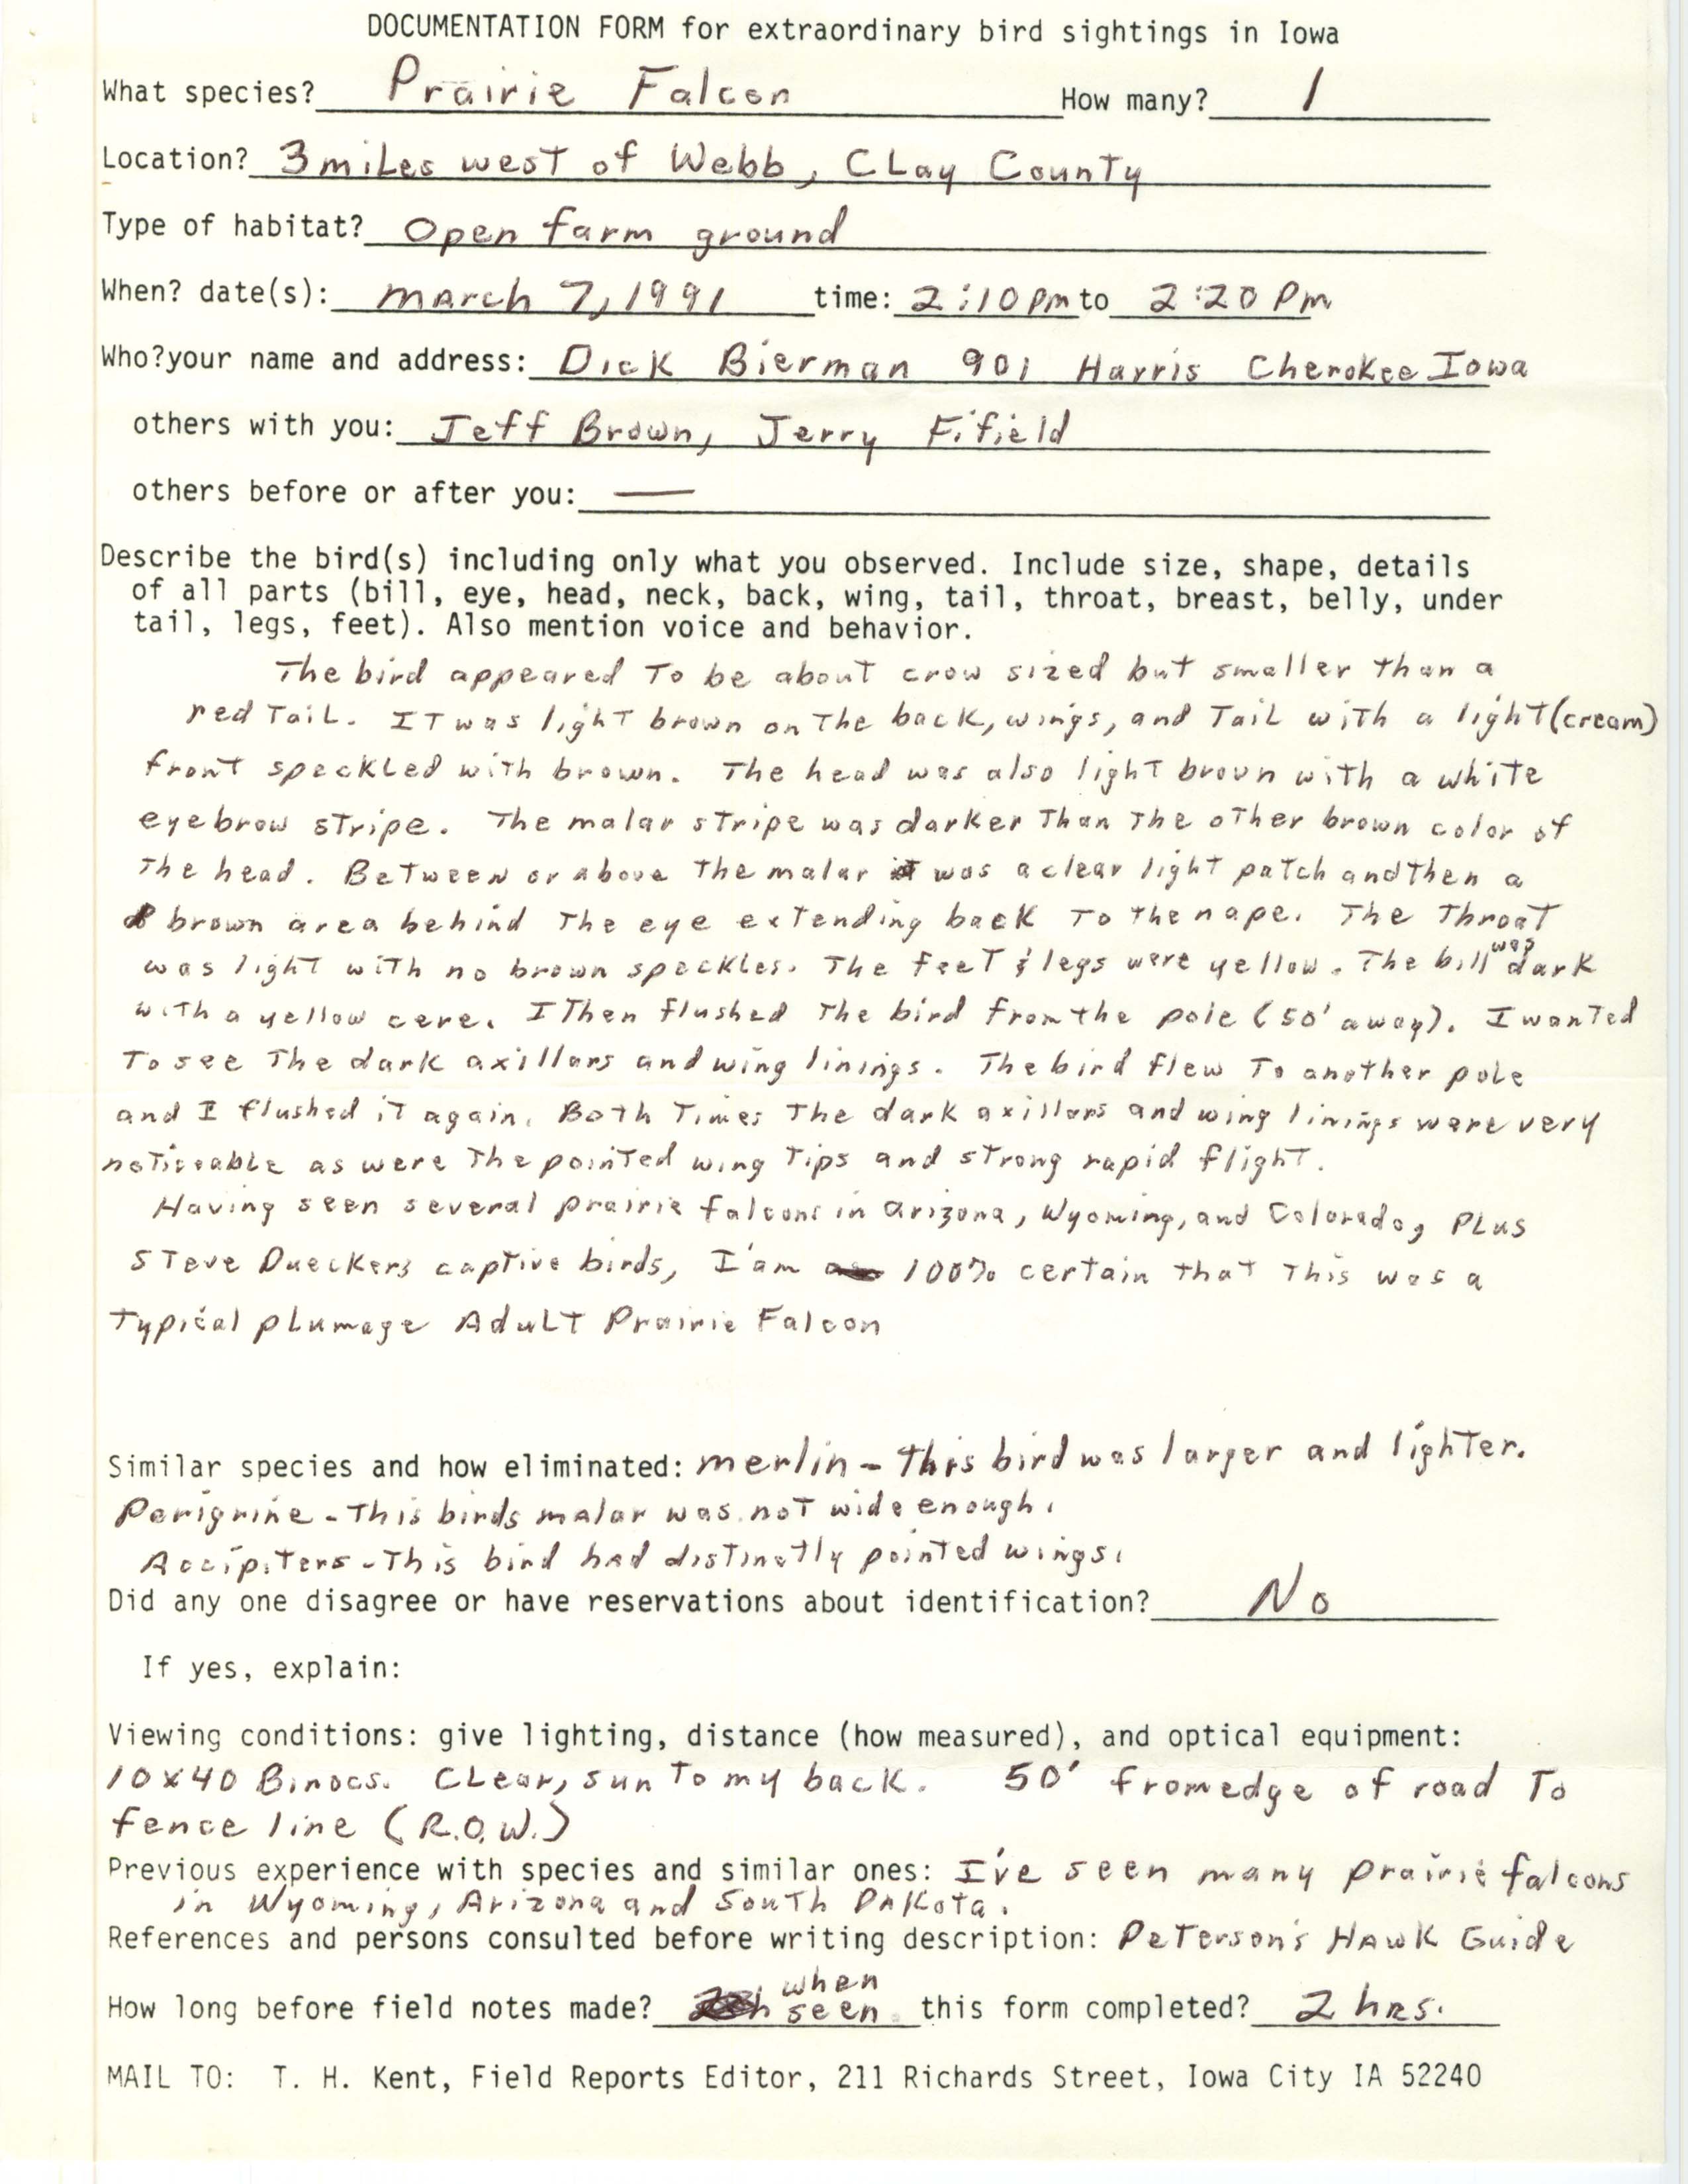 Rare bird documentation form for Prairie Falcon west of Webb, 1991